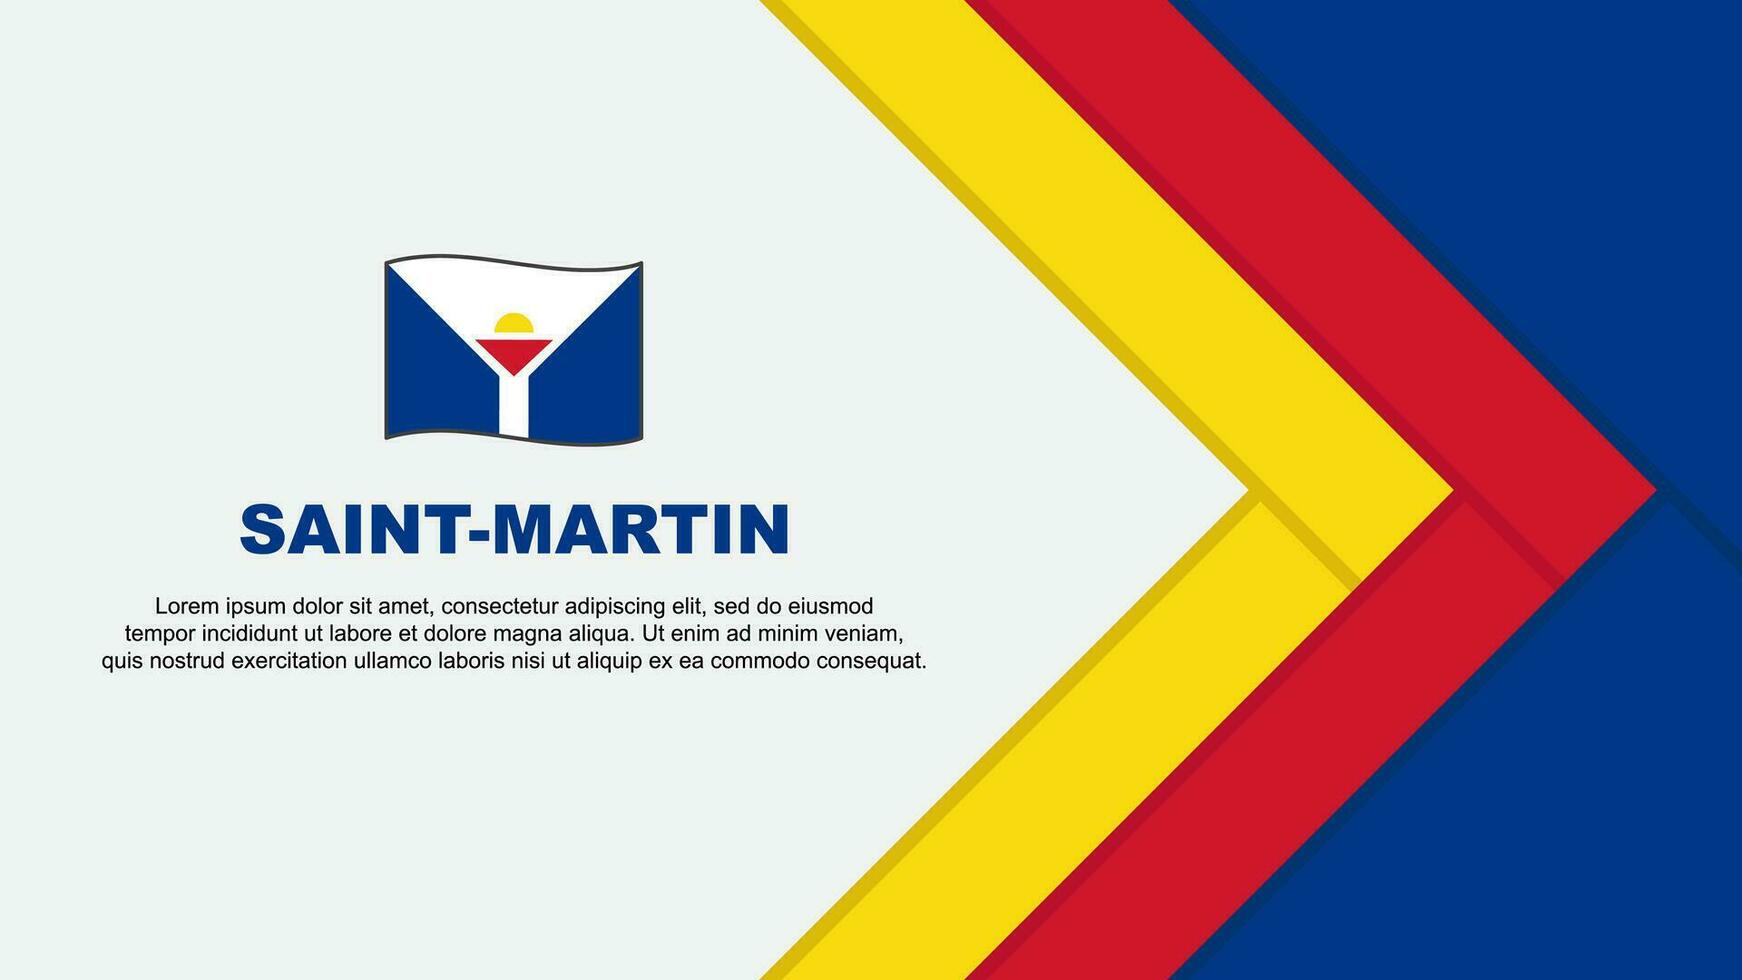 Saint Martin Flag Abstract Background Design Template. Saint Martin Independence Day Banner Cartoon Vector Illustration. Saint Martin Cartoon